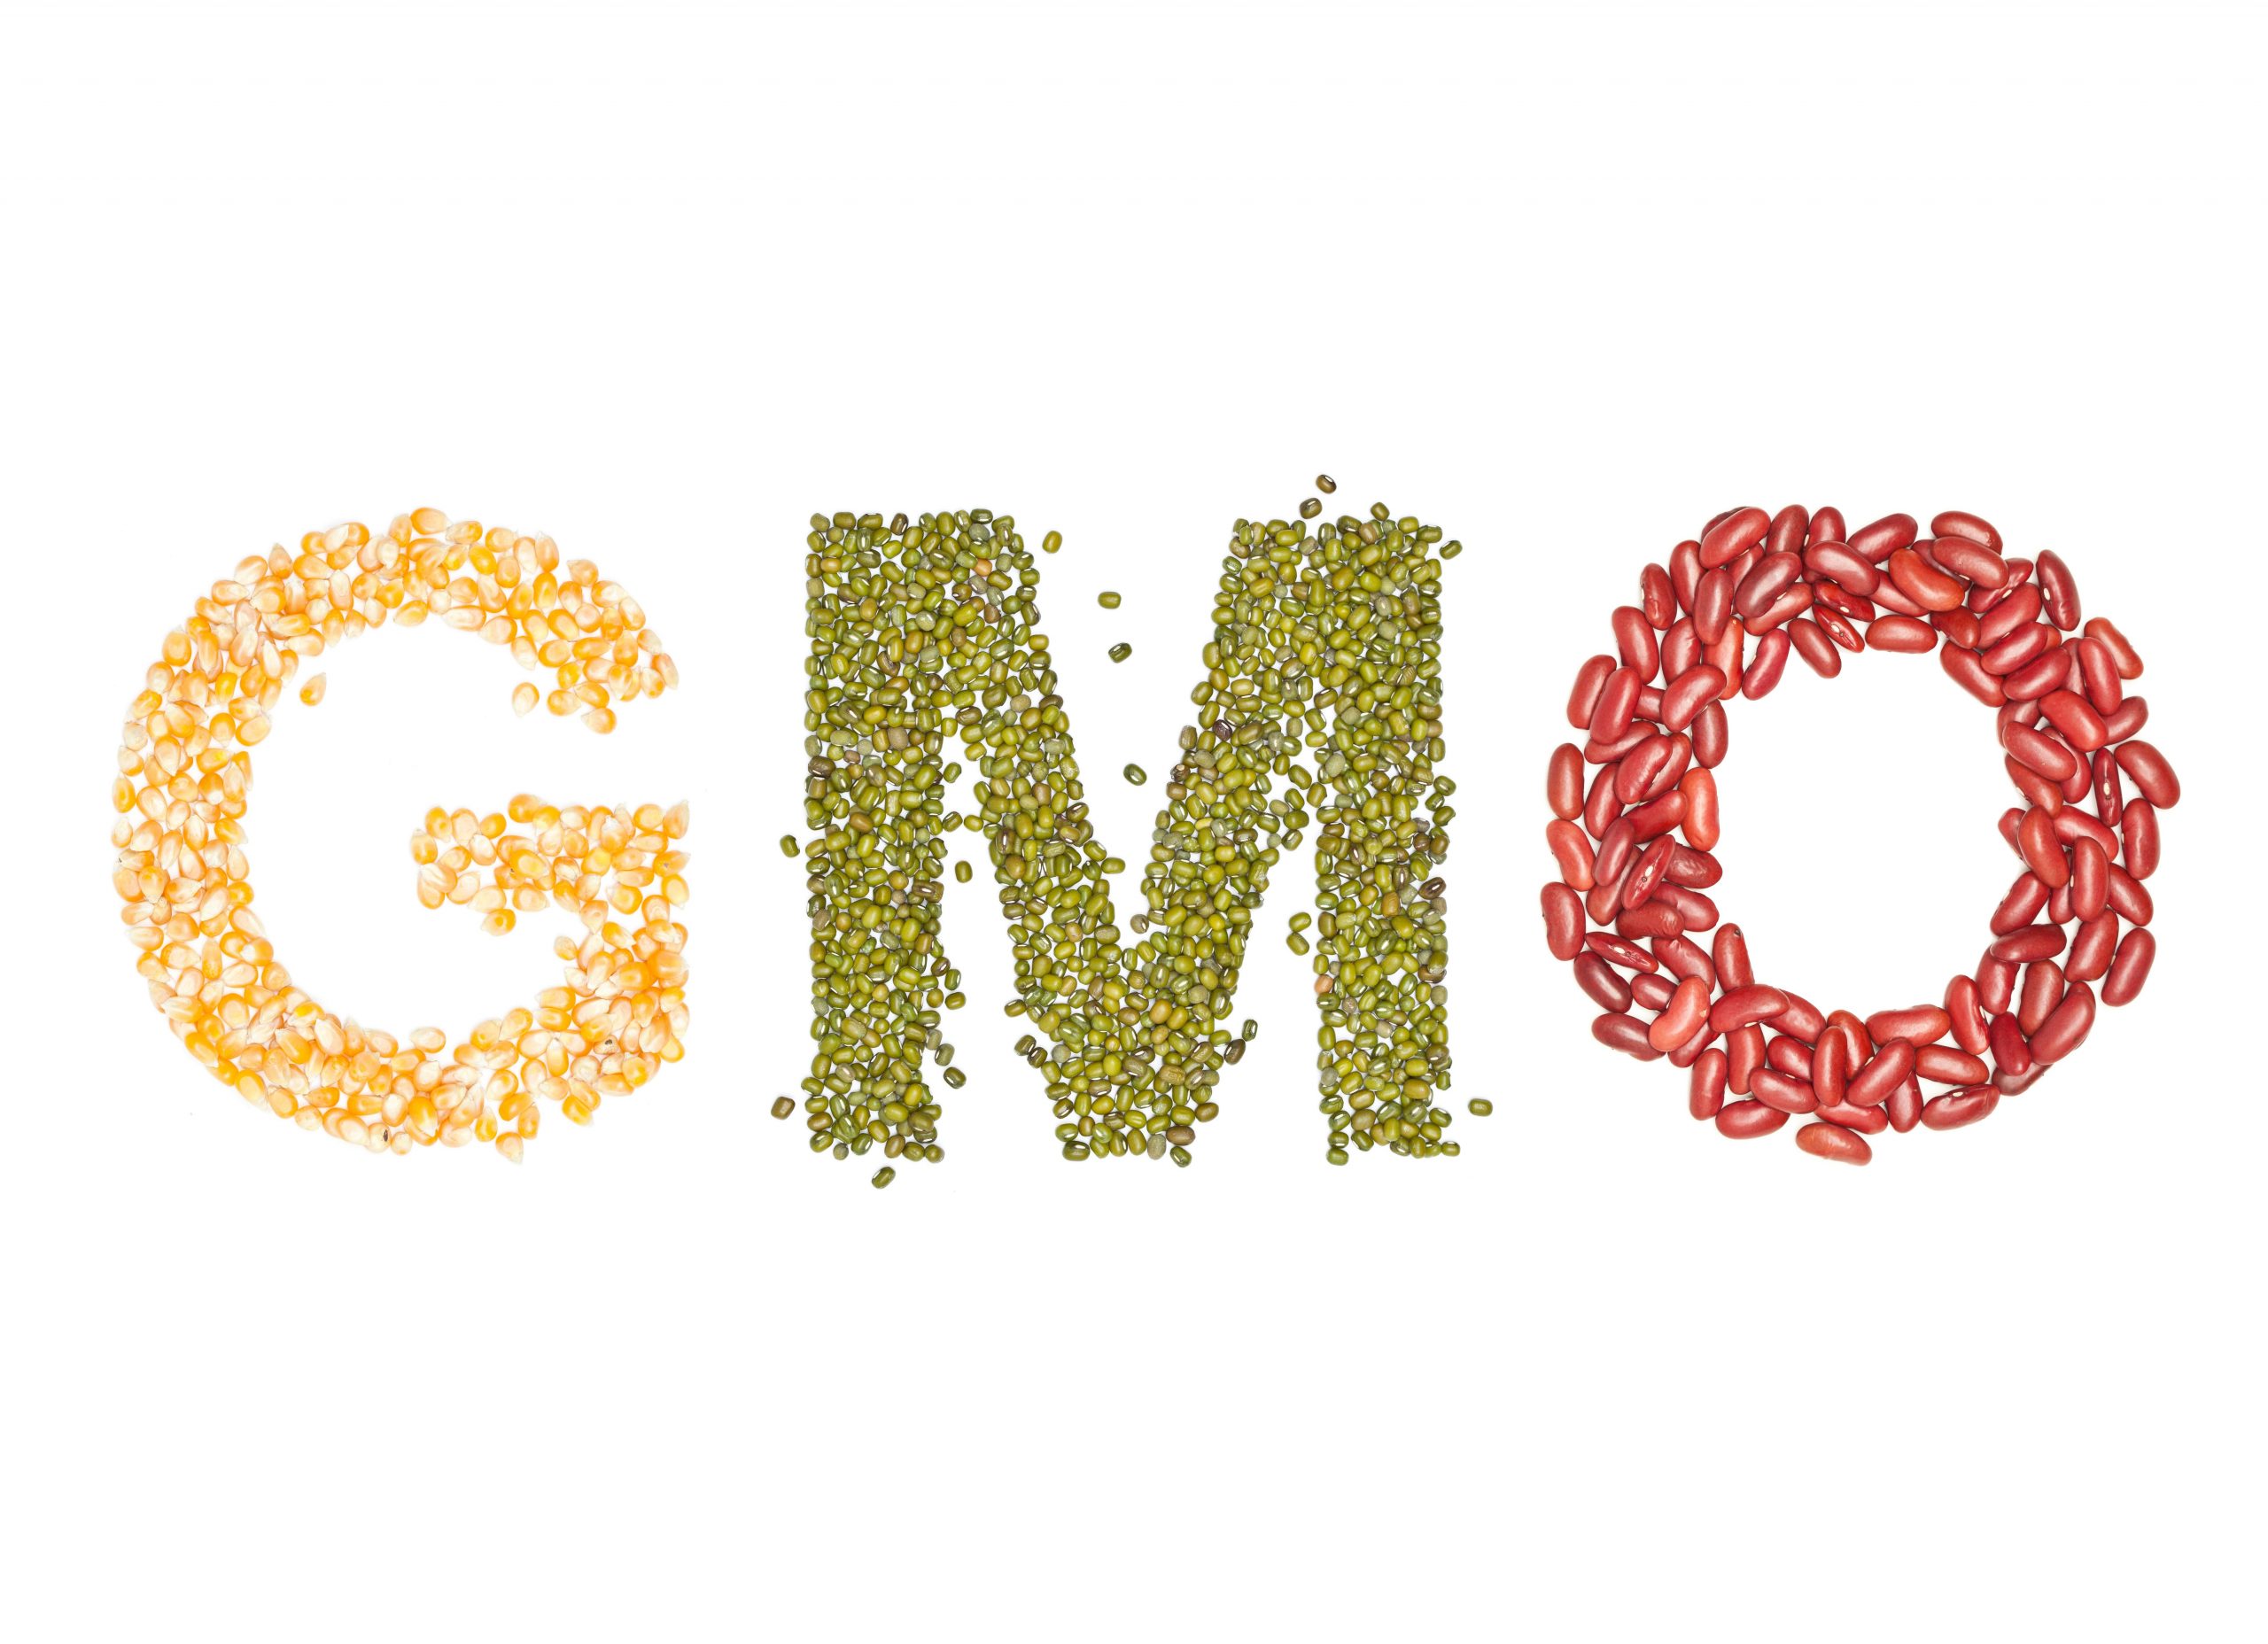 How to avoid GMO's